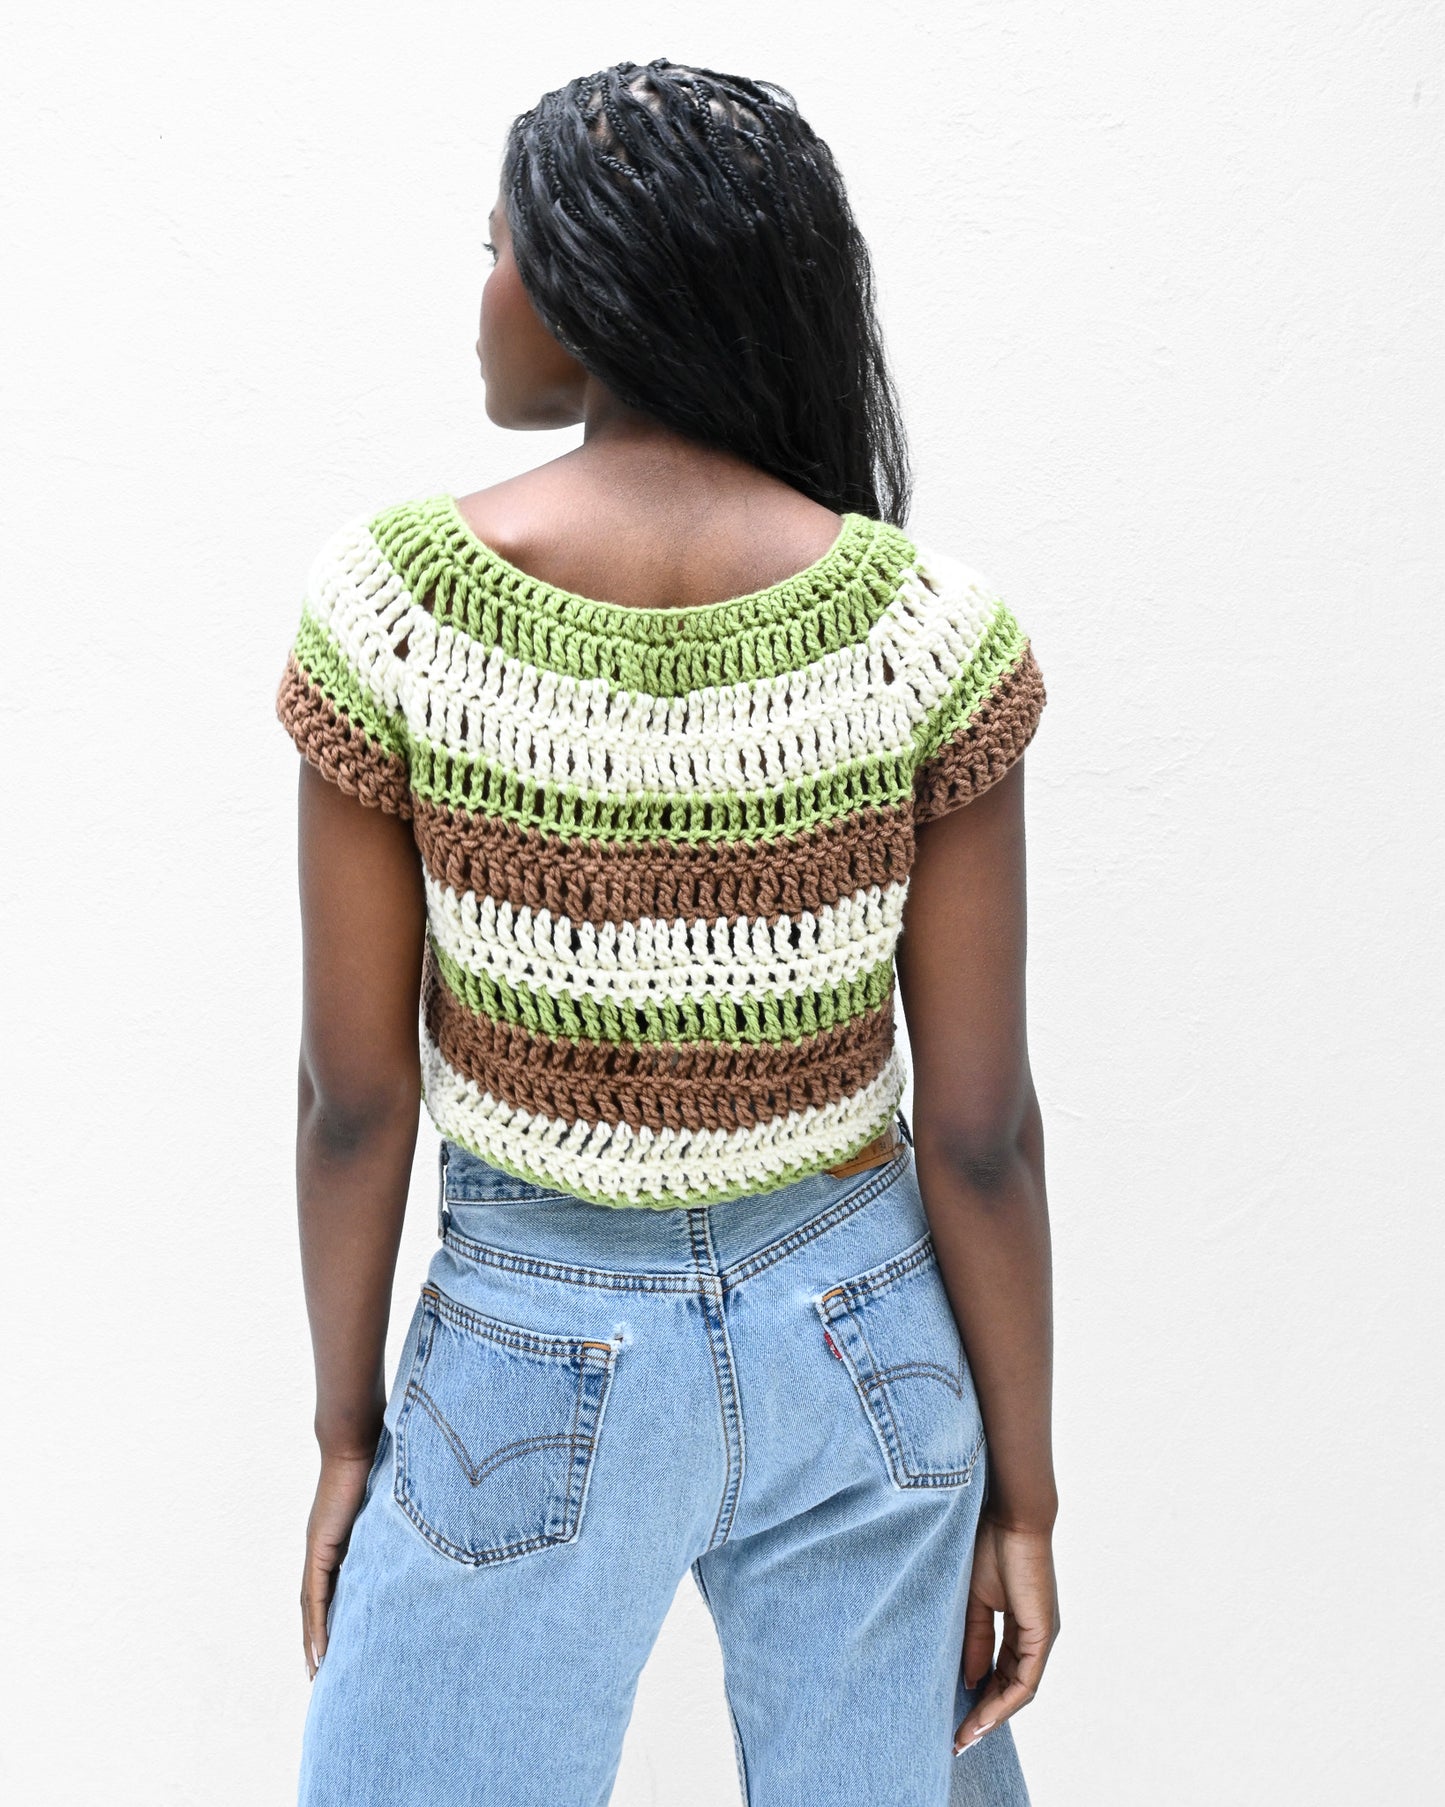 Handmade Striped Crochet Cropped Top (S)